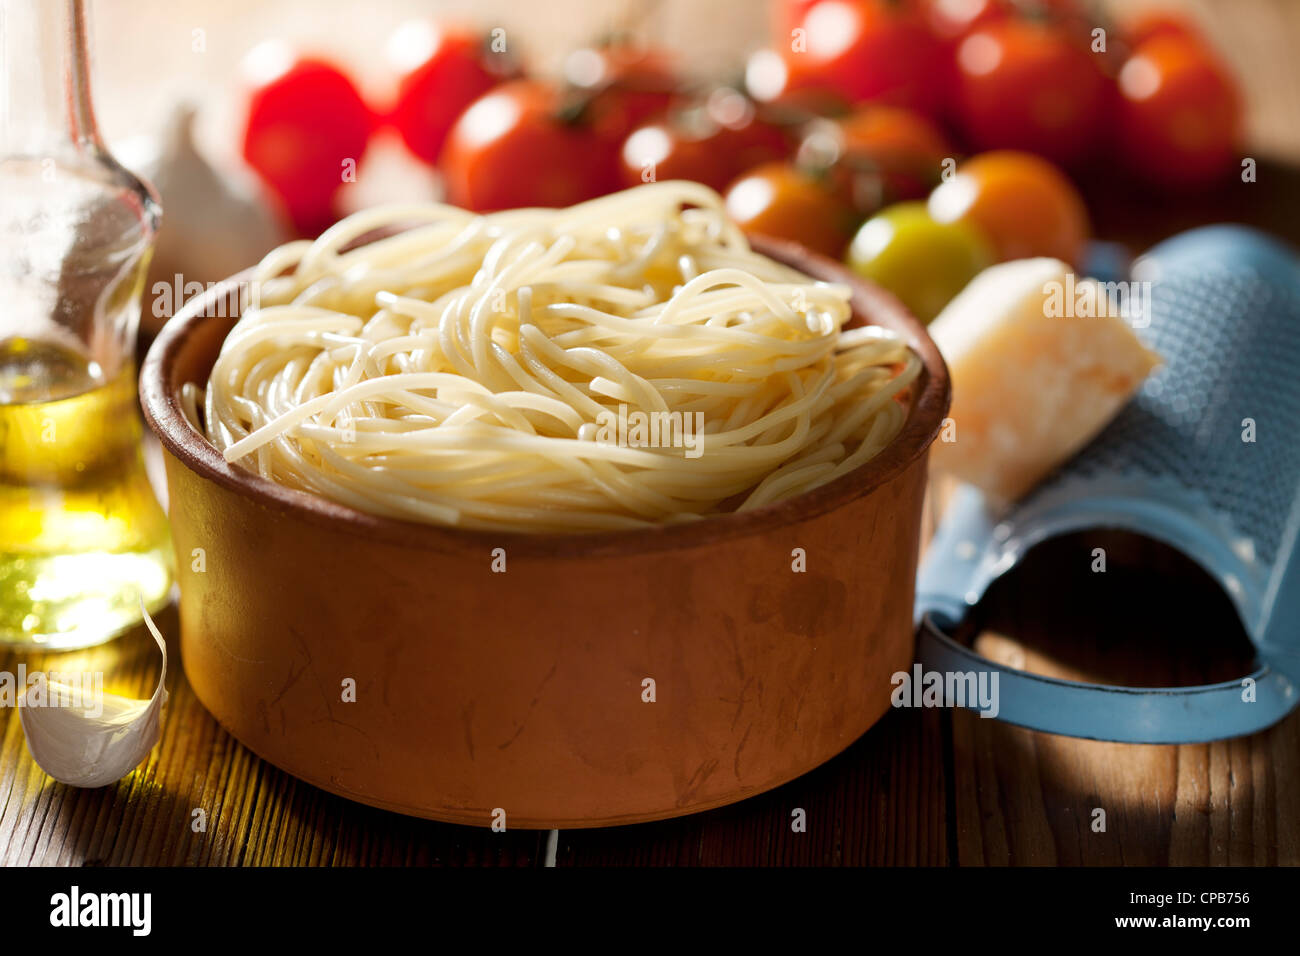 pasta Stock Photo